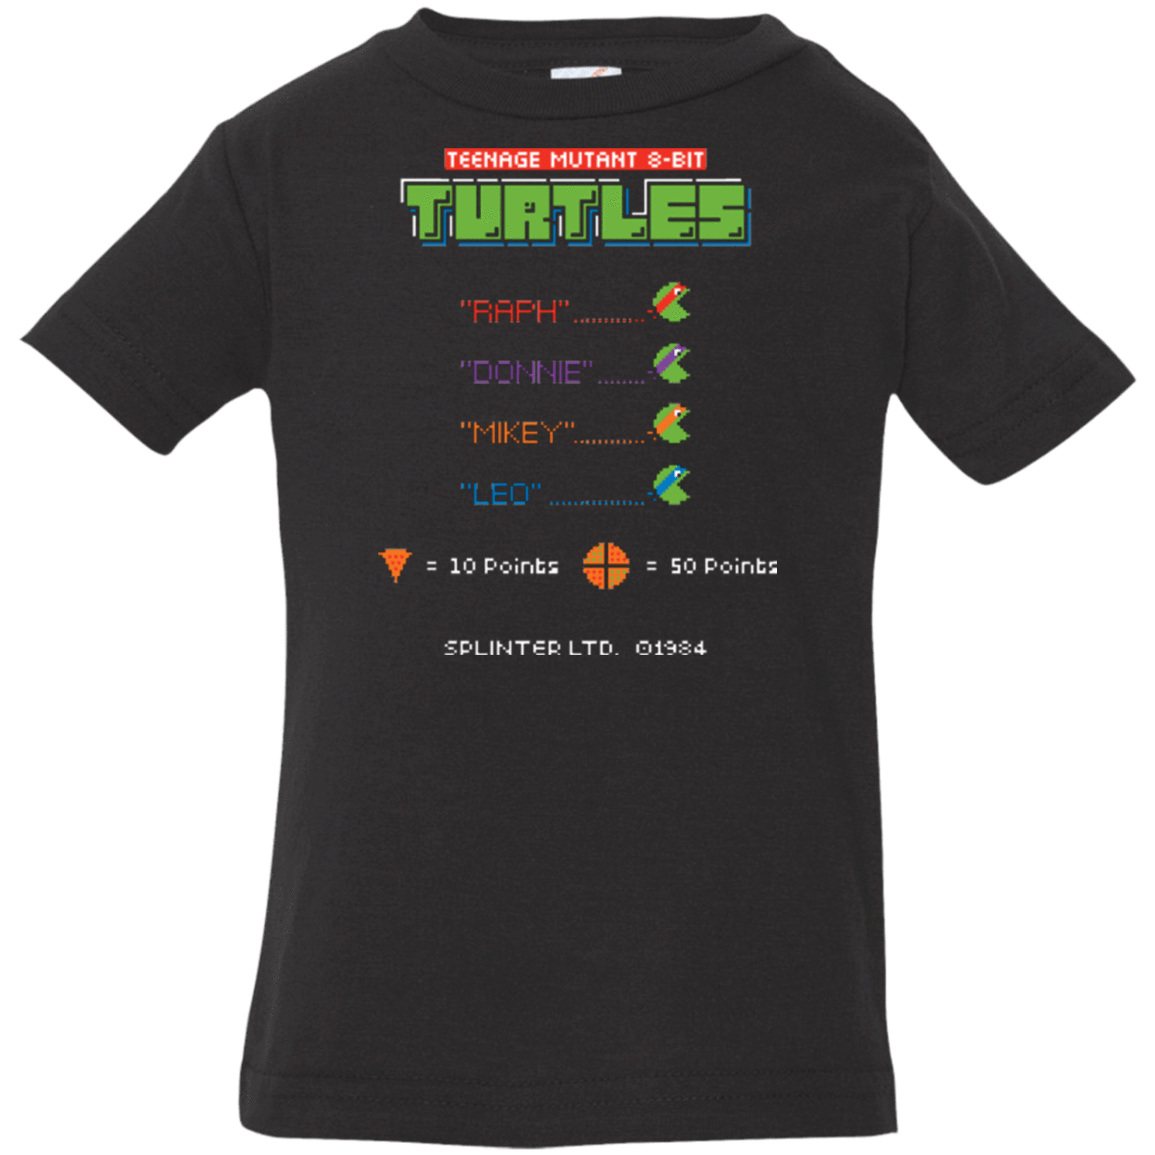 T-Shirts Black / 6 Months 8 Bit Turtles Infant Premium T-Shirt